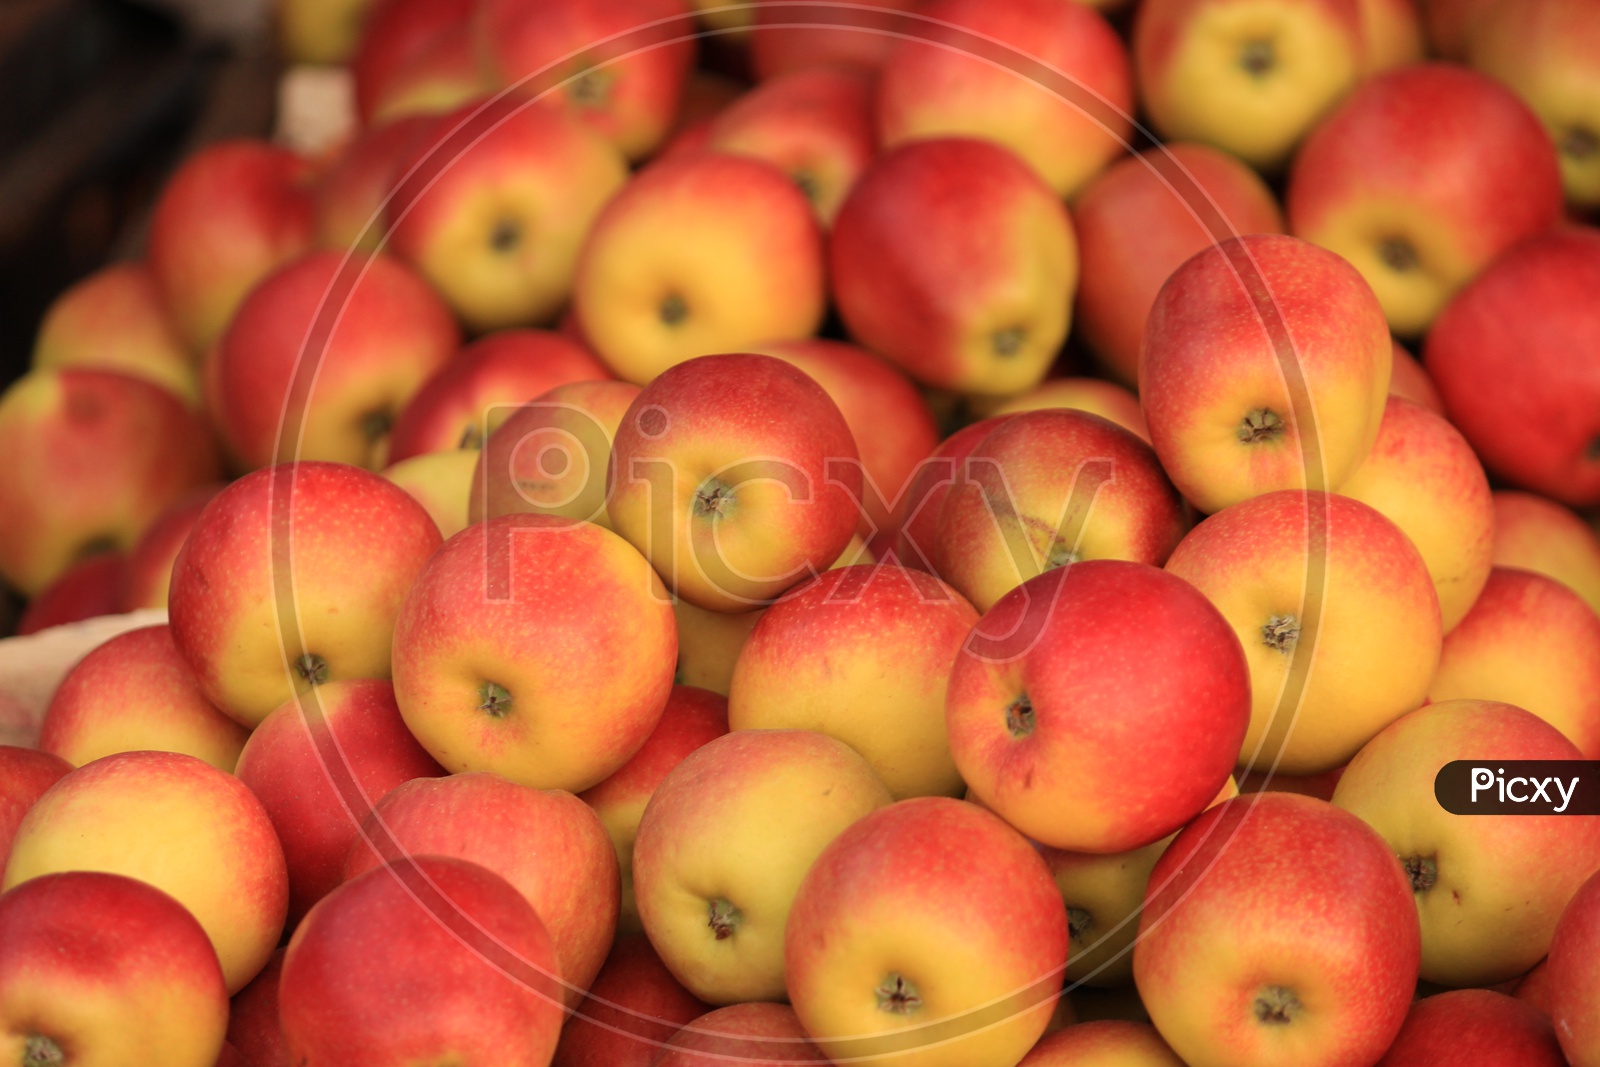 Apples Closeup In a Vendor Stall